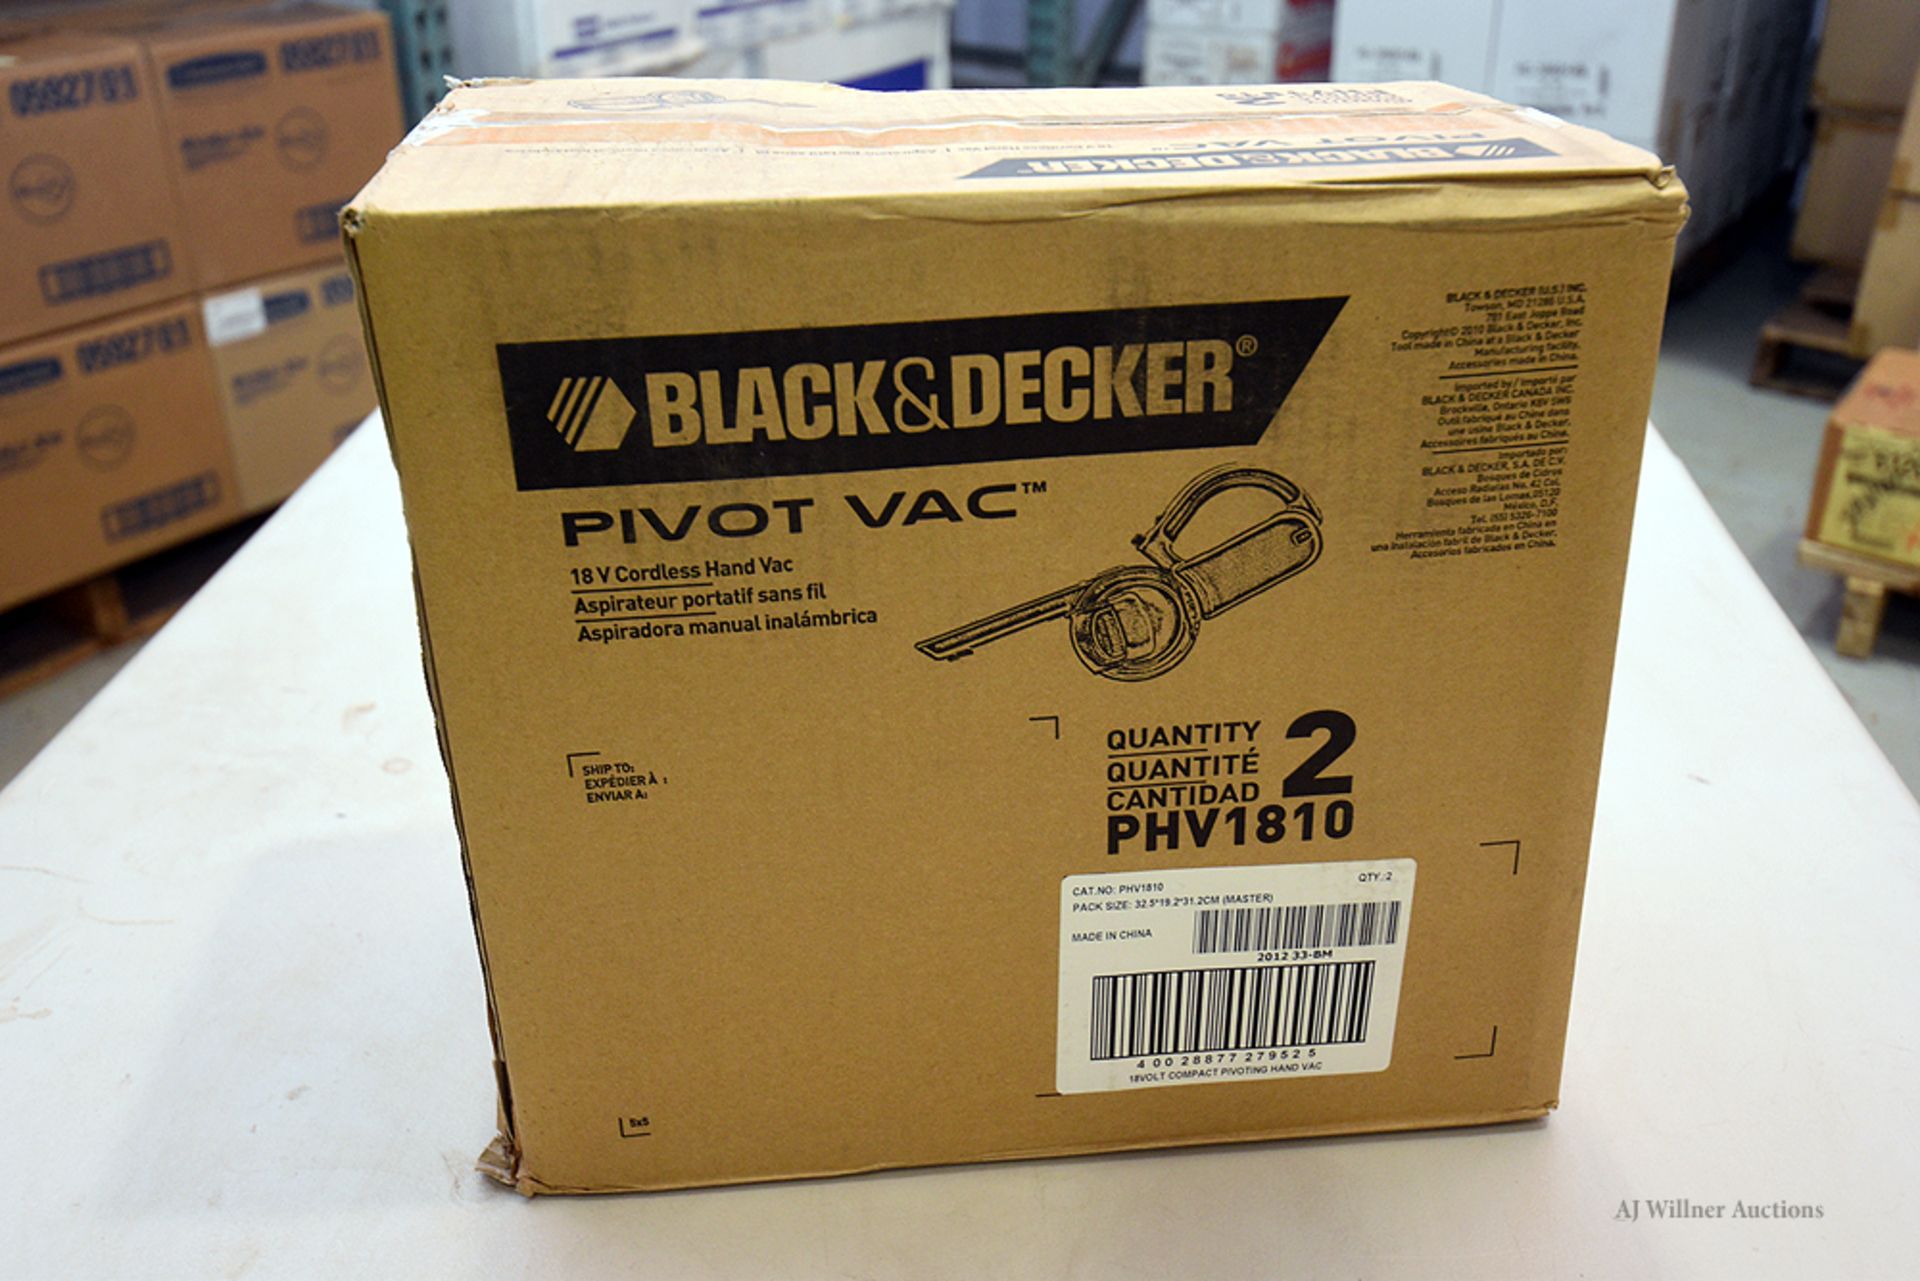 Black & Decker, "Pivot Vac", Model PHV1810